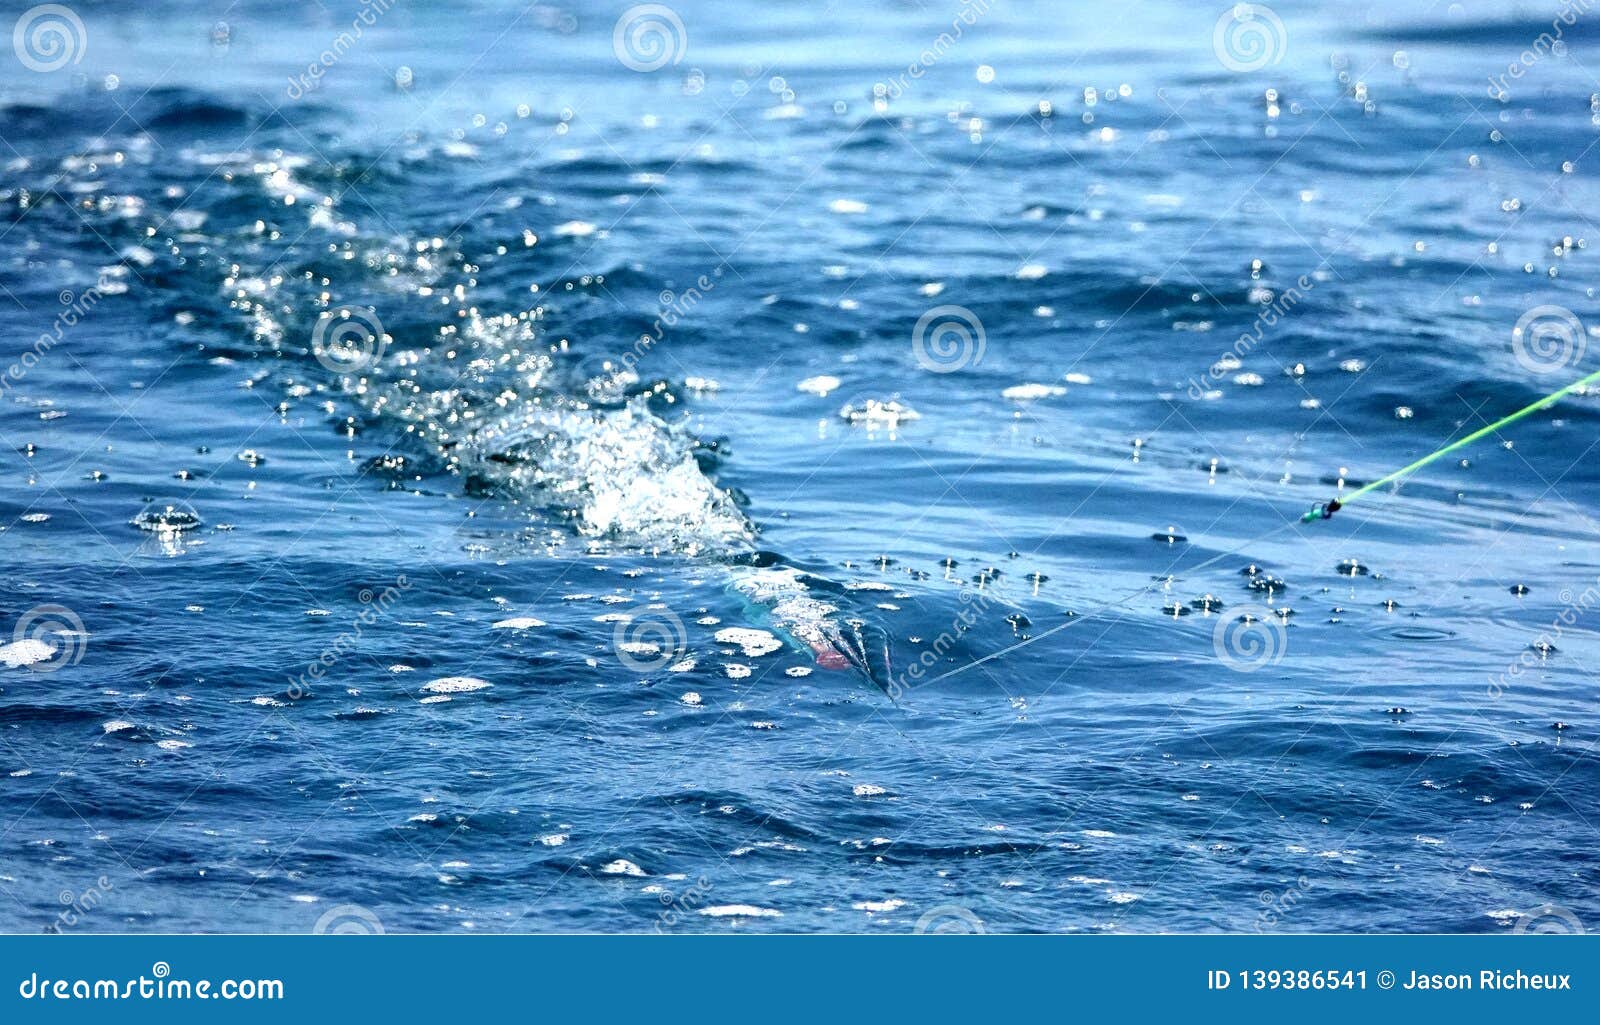 https://thumbs.dreamstime.com/z/big-bubble-trail-trolling-lure-sportfishing-dragging-making-bubbles-sport-fishing-costa-rica-nice-deep-blue-water-139386541.jpg